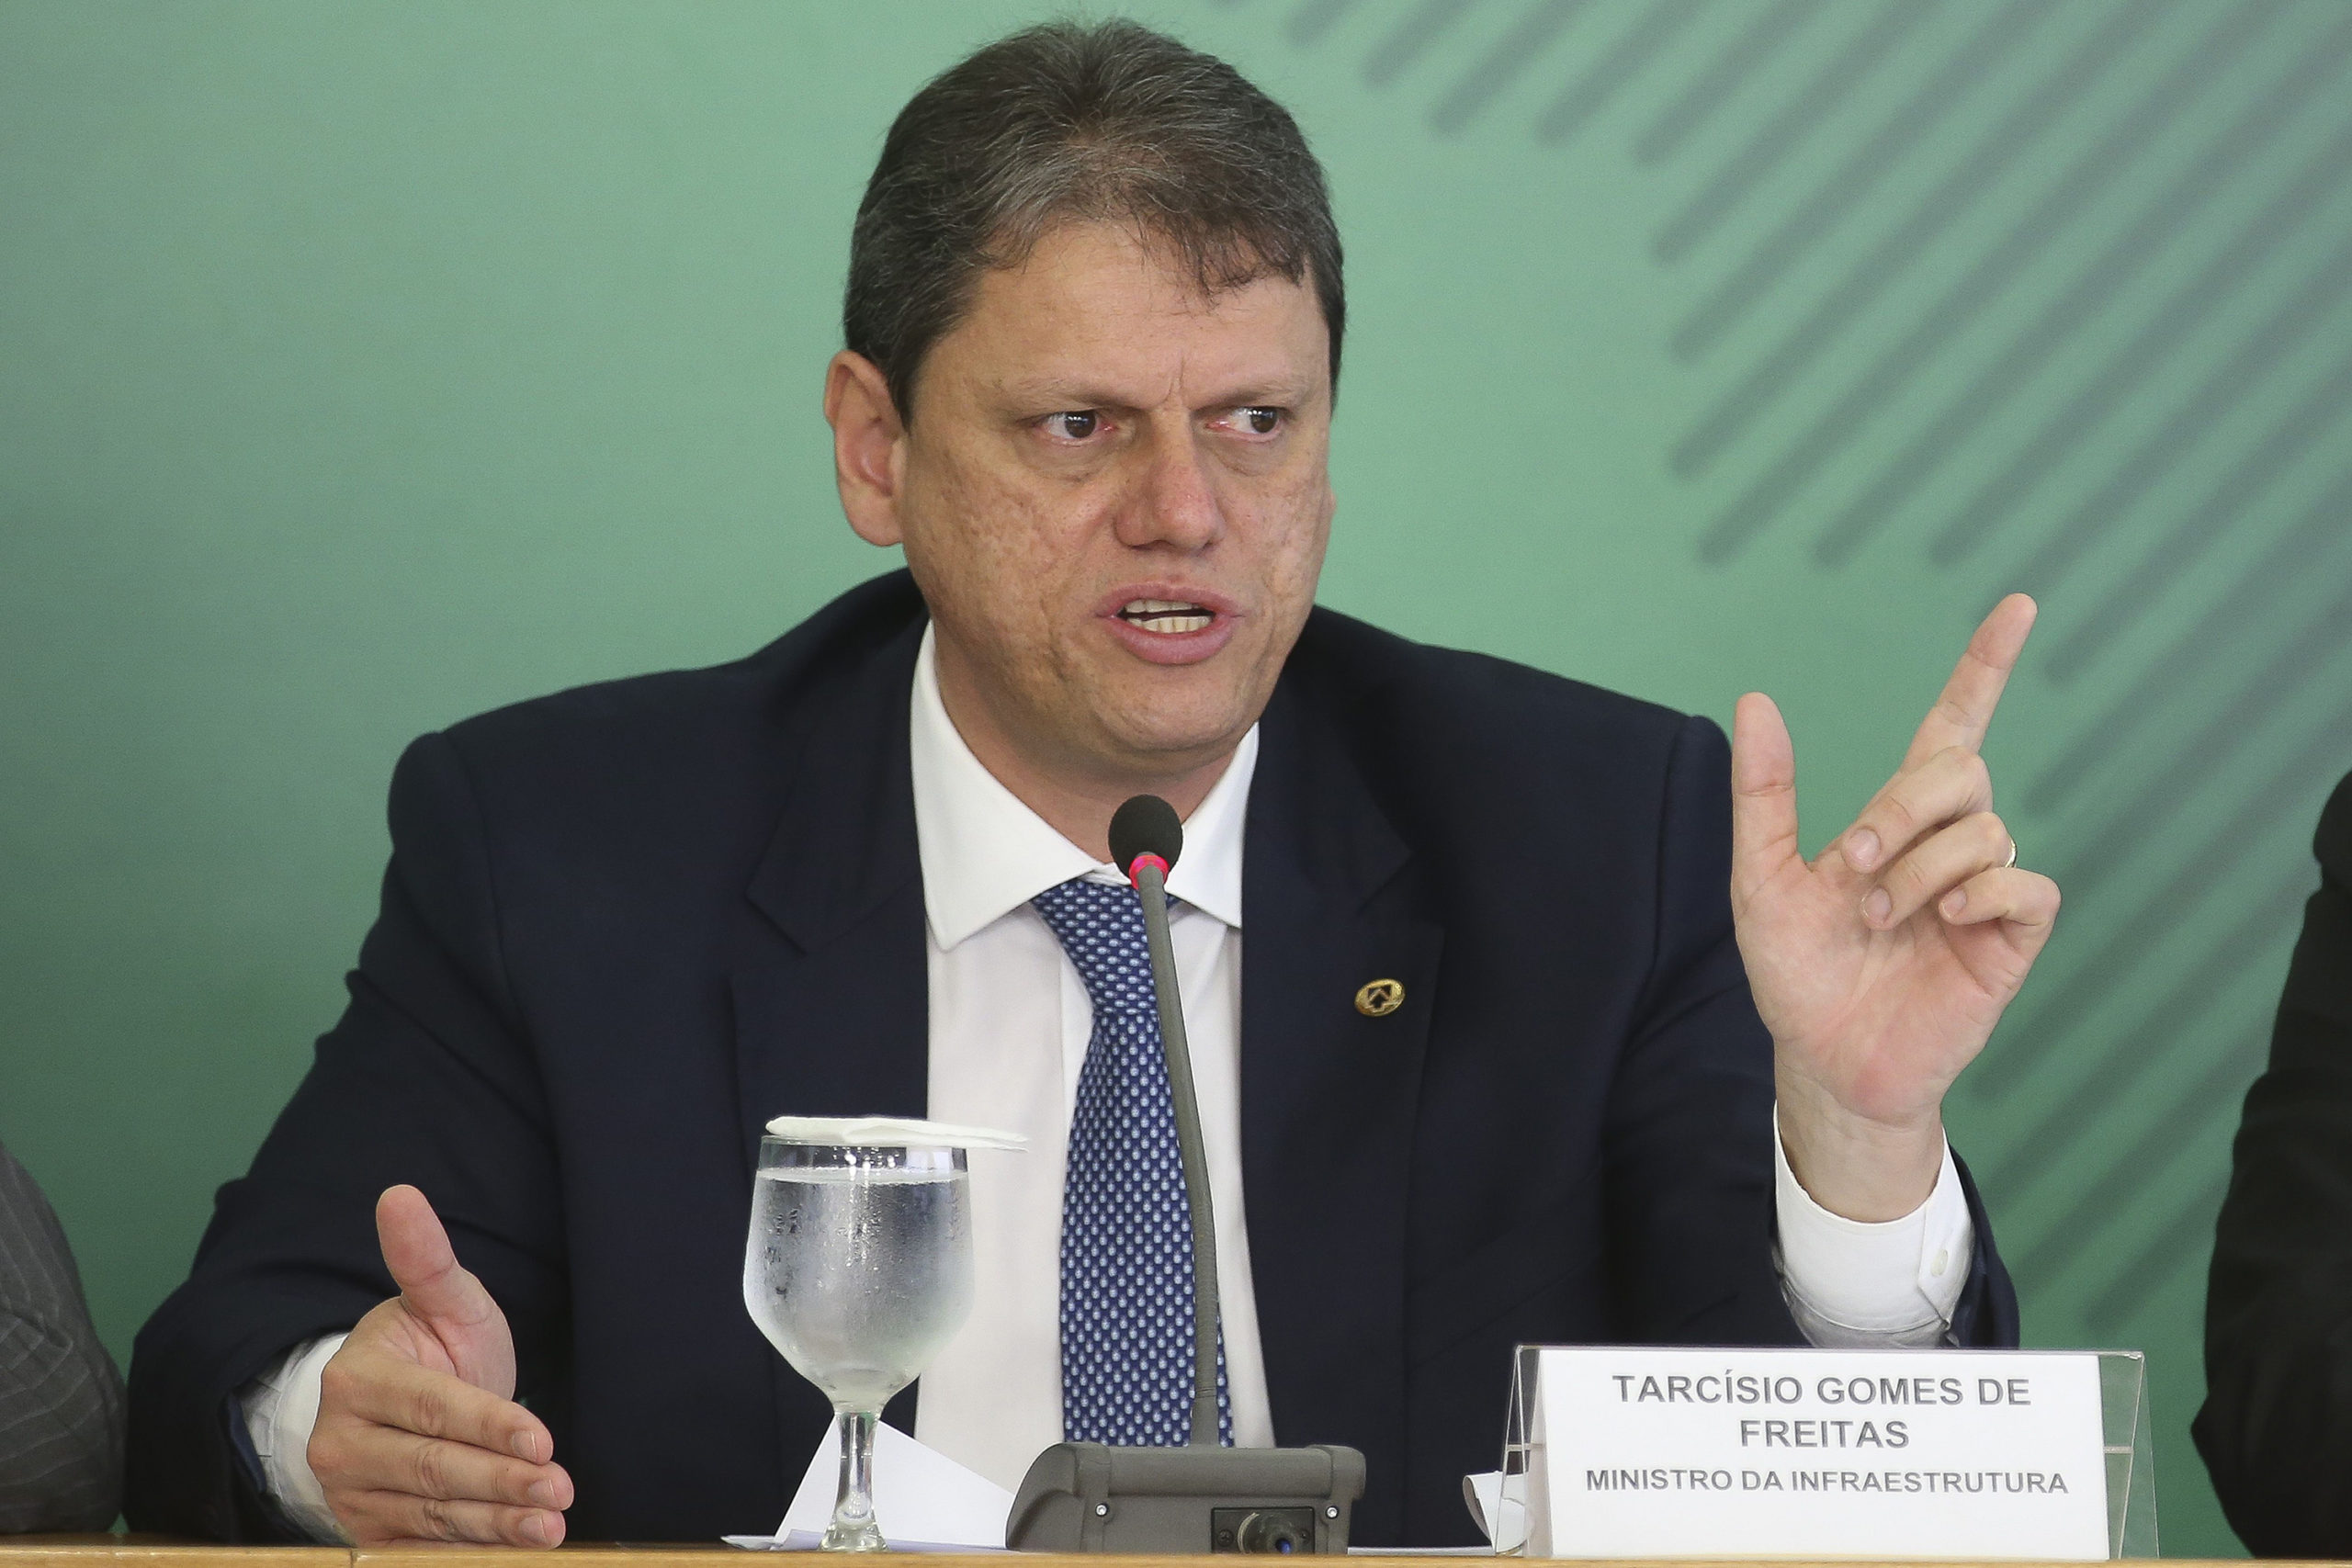 Brazil's Minister of Infrastructure, Tarcísio Gomes de Freitas.